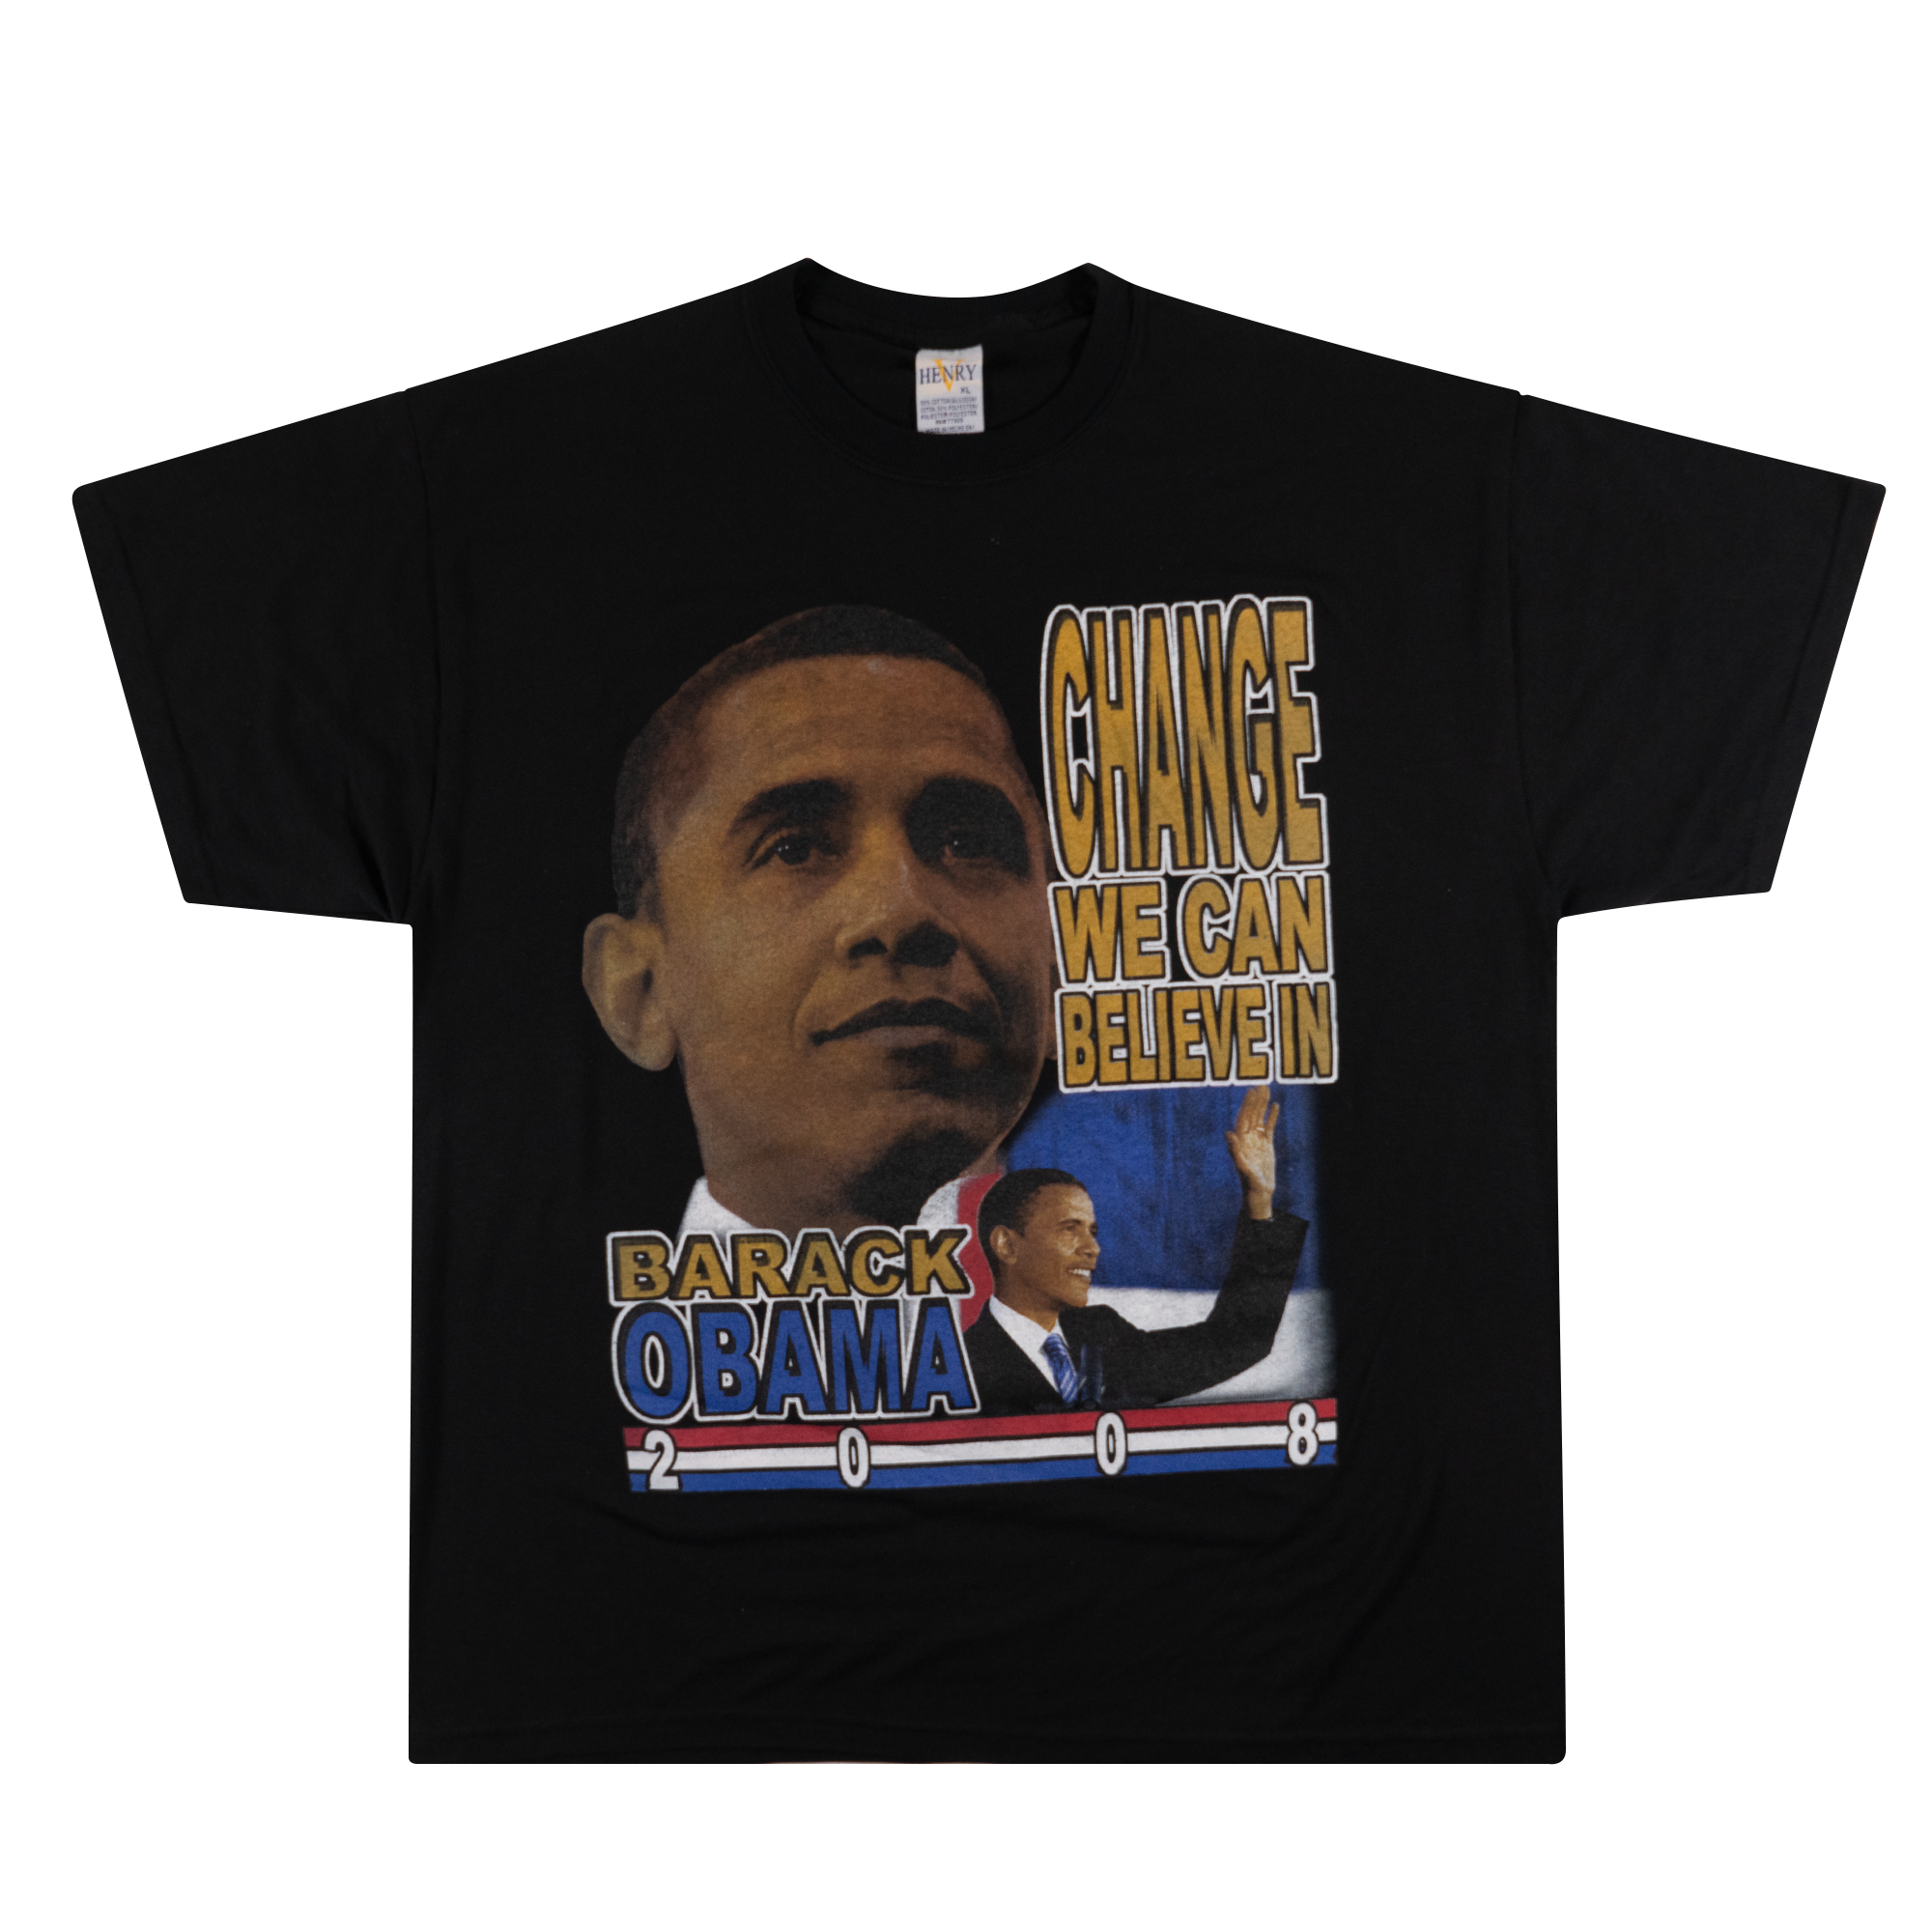 Barack Obama "Change We Can Believe In" 2008 Tee Black-PLUS